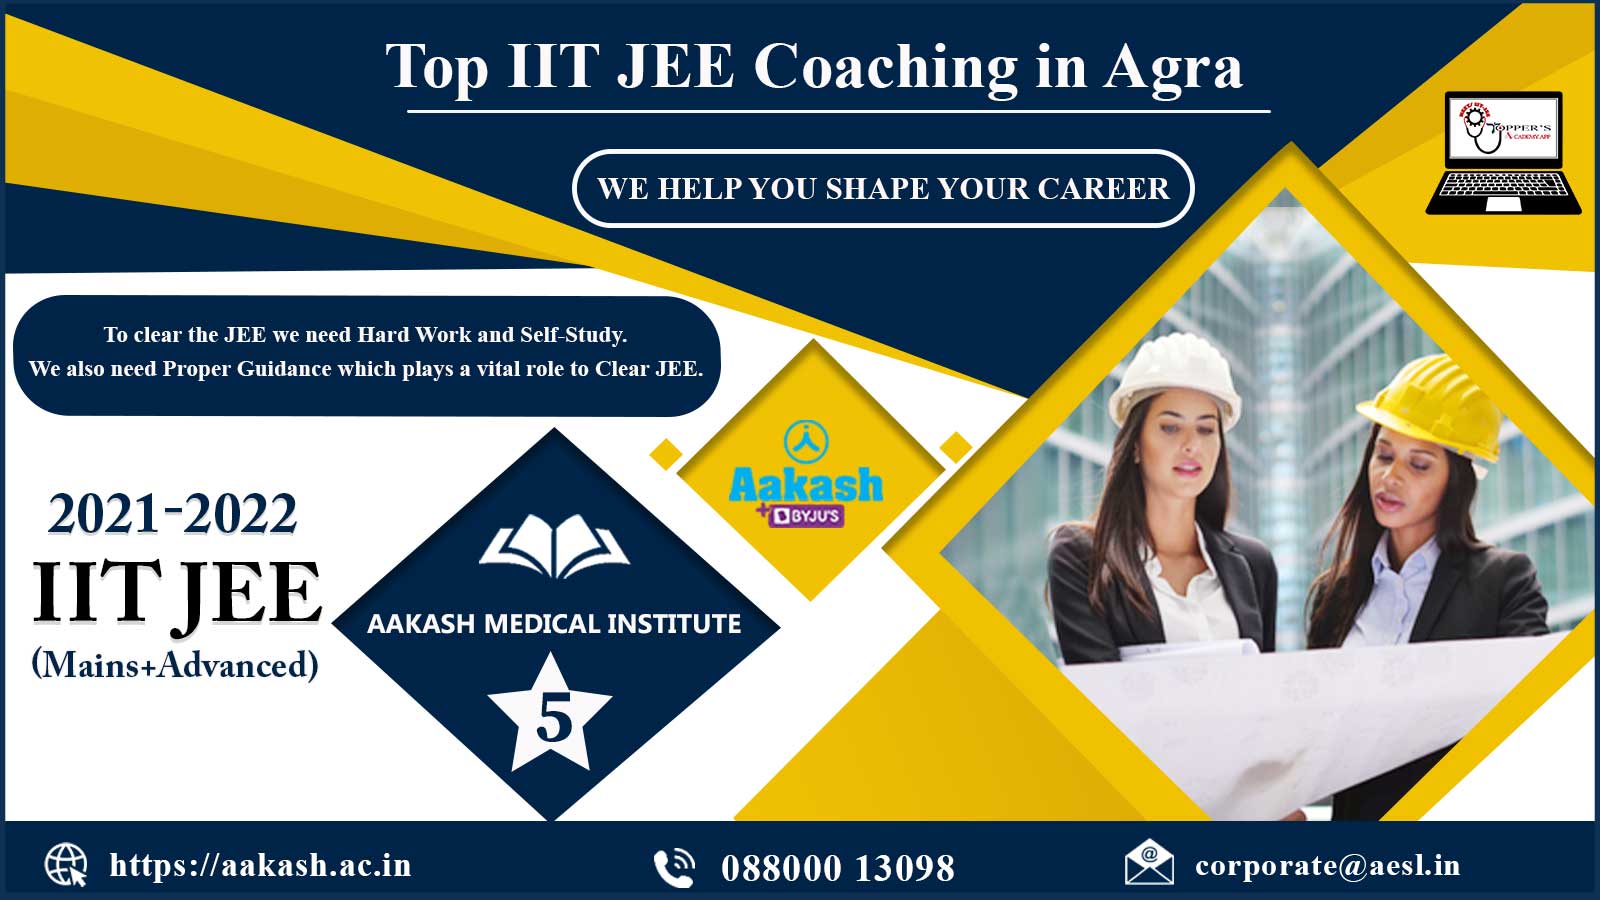 Aakash IIT JEE Coaching in Agra